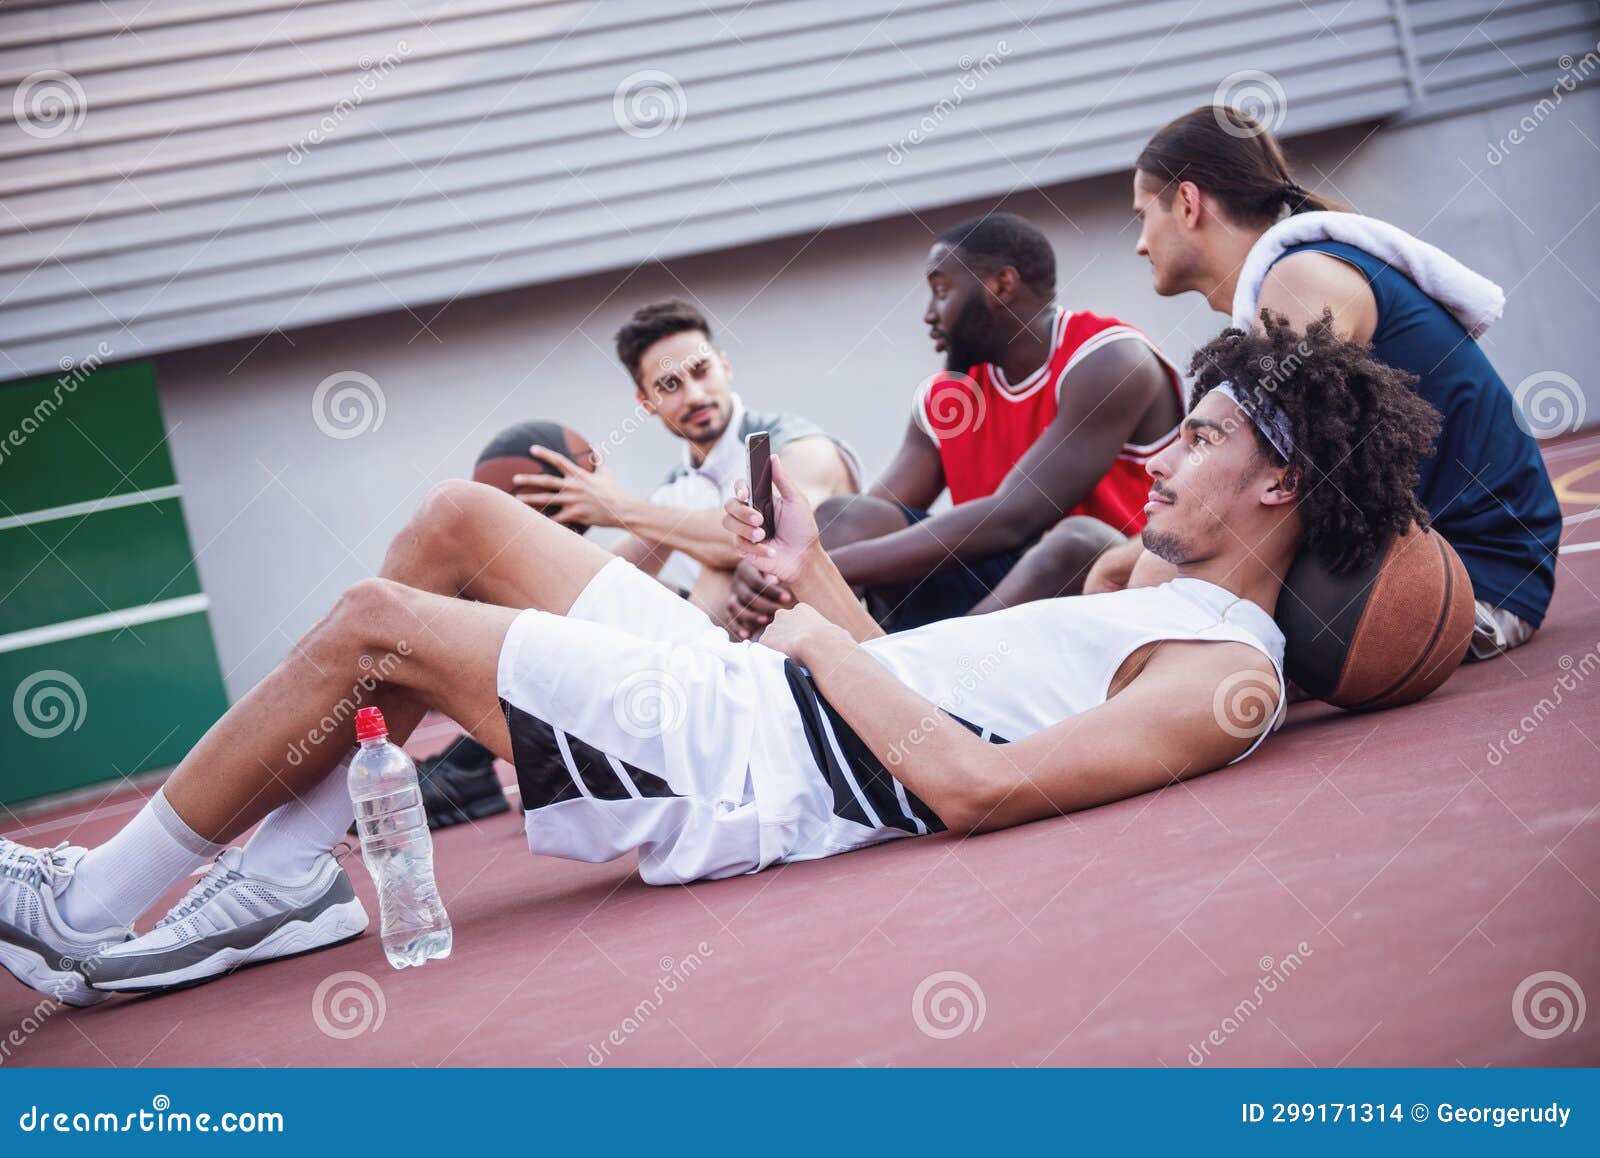 Guys playing basketball stock photo. Image of lifestyle - 299171314